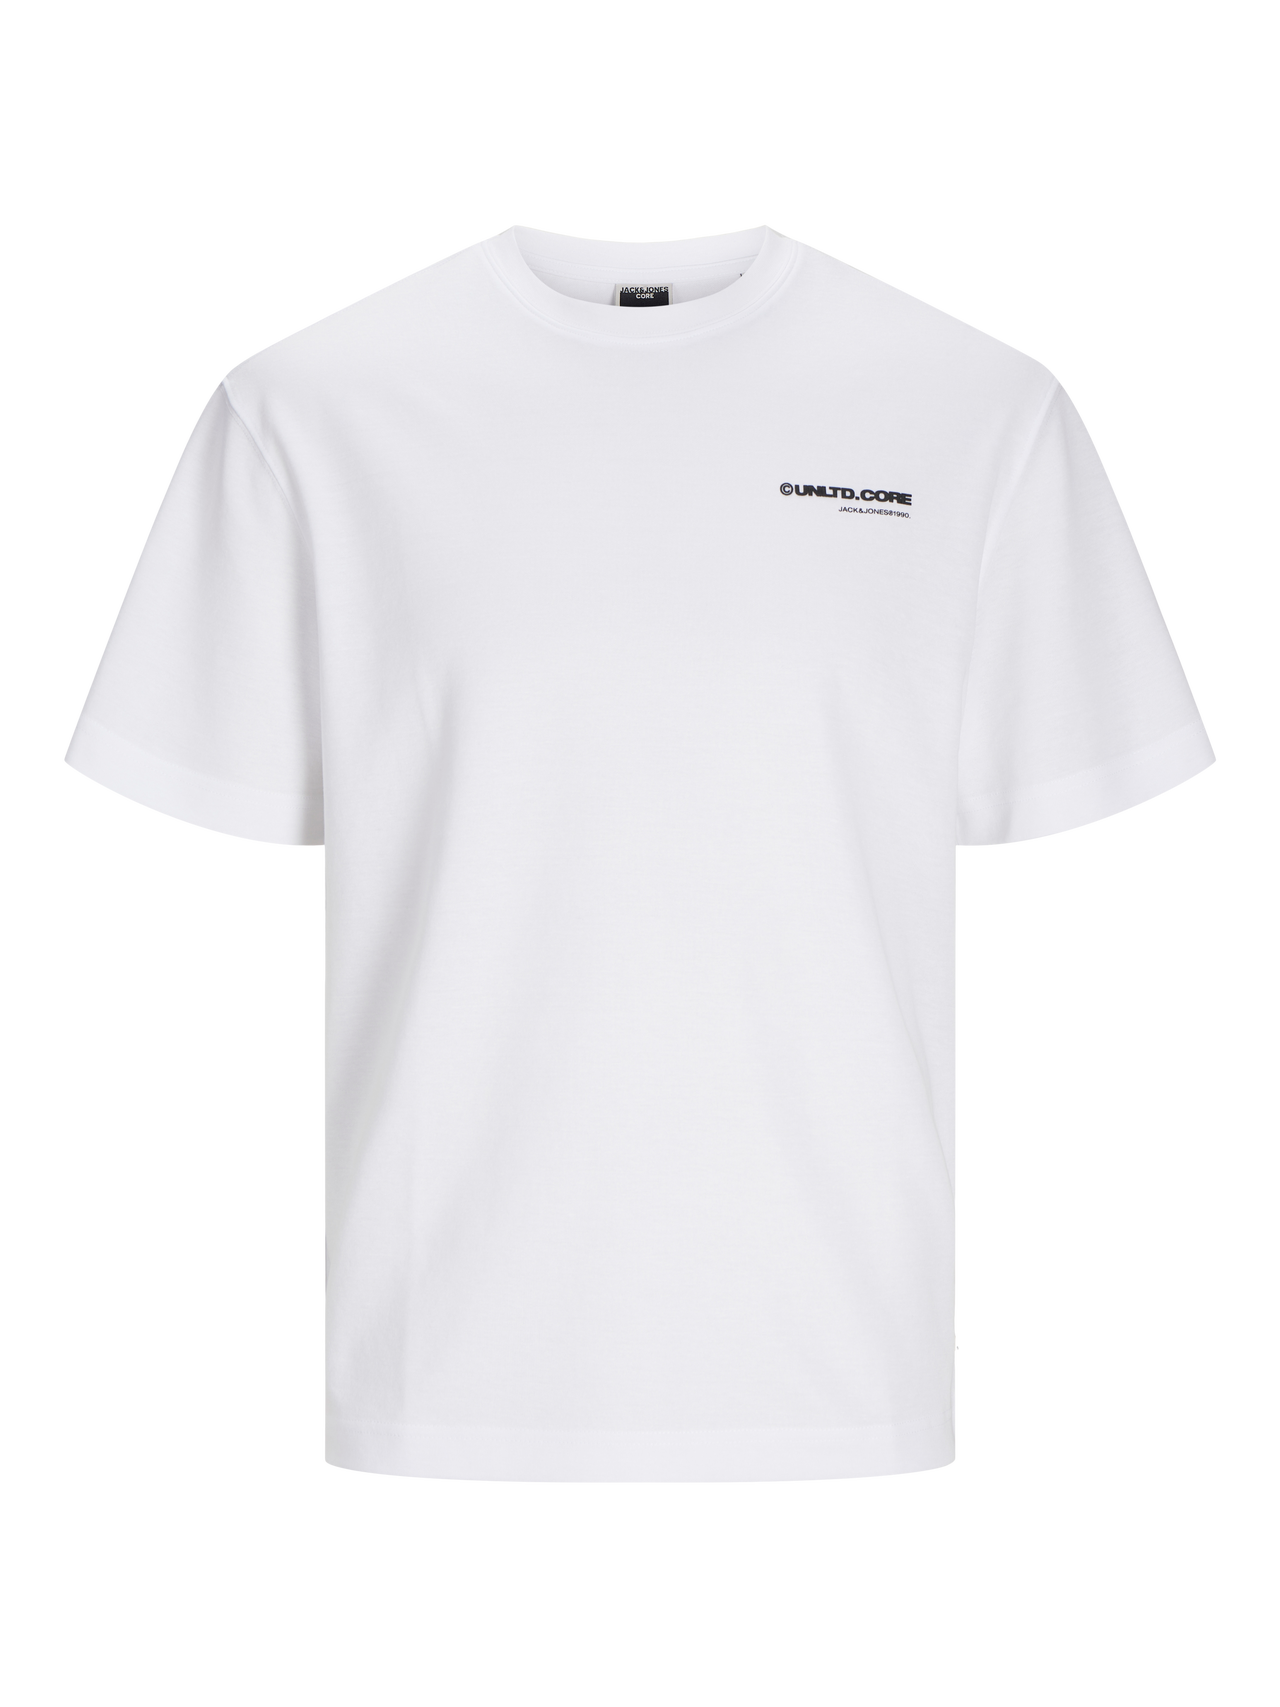 Jack & Jones Καλοκαιρινό μπλουζάκι -White - 12260003